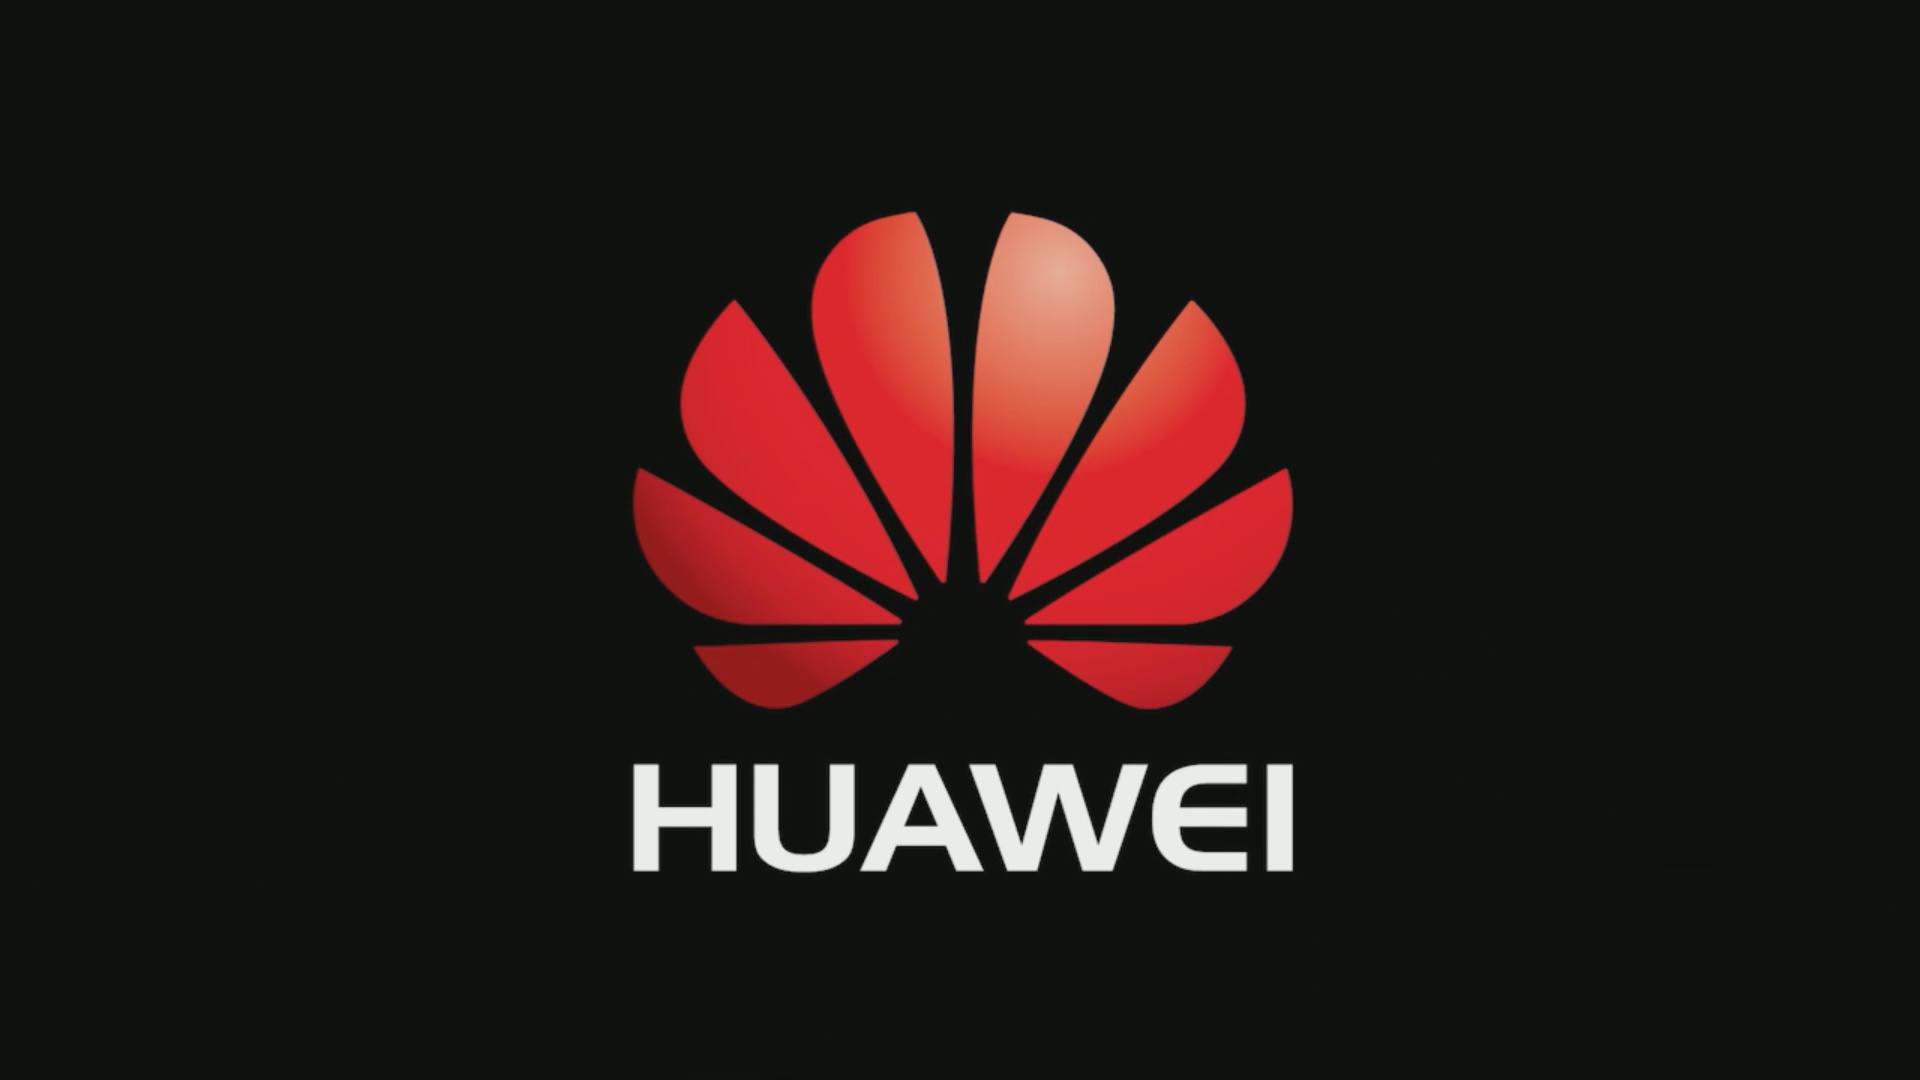 Fixed - Sound Not Works on Huawei nova 2s